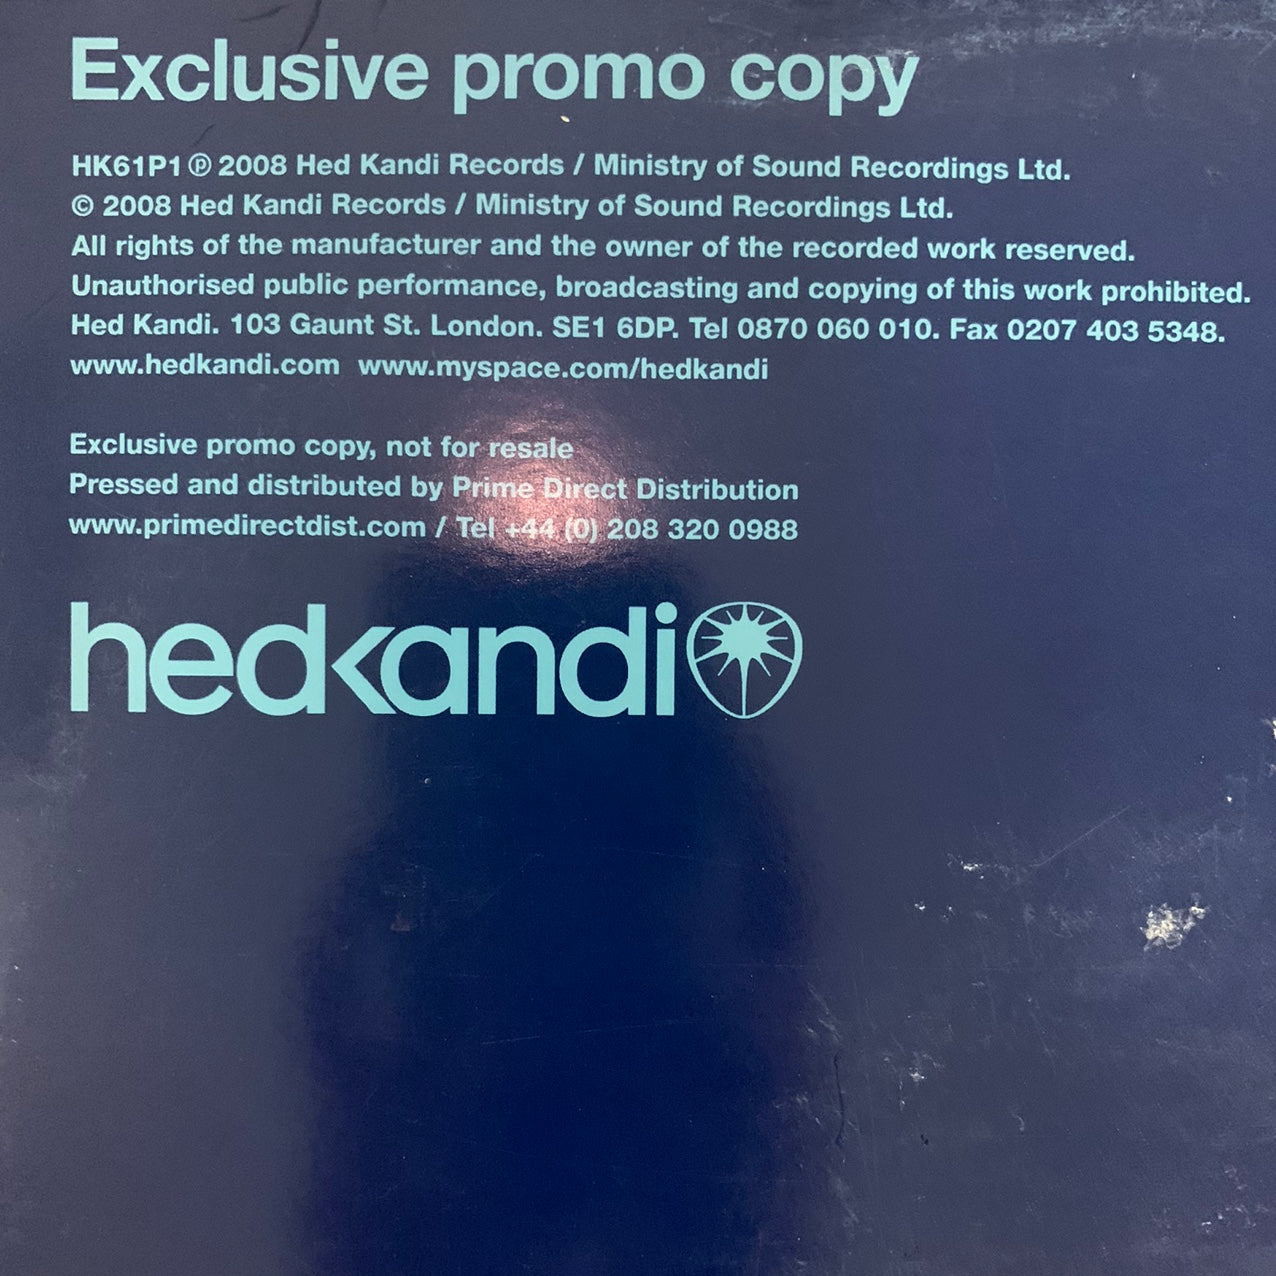 Hed Kandi DJ Sampler Volume 6 Promo 12inch Vinyl